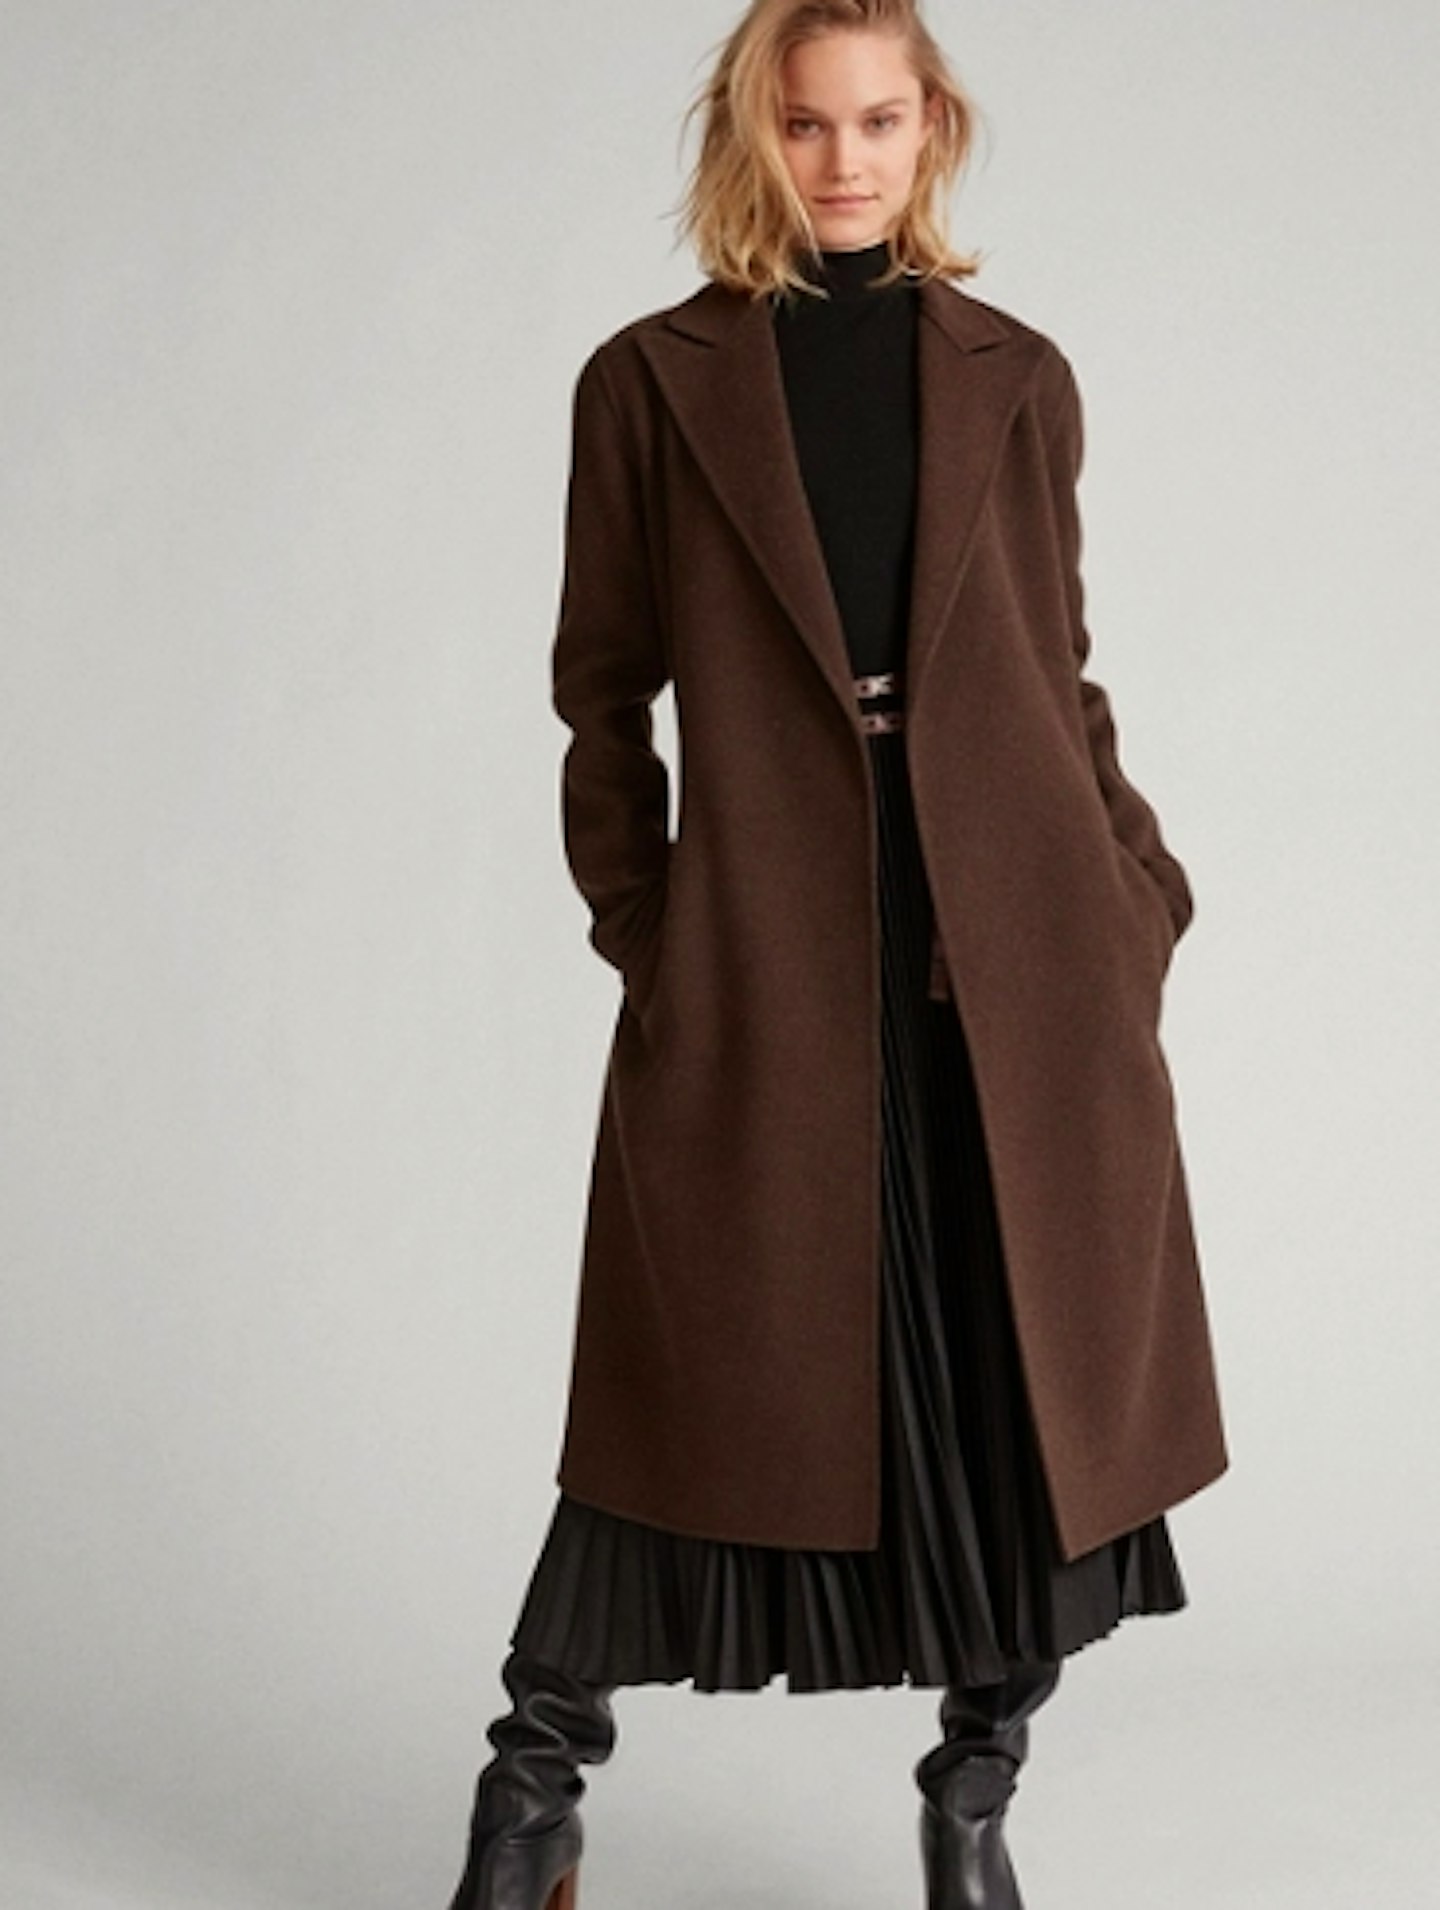 Wool-Blend Wrap Coat, £499